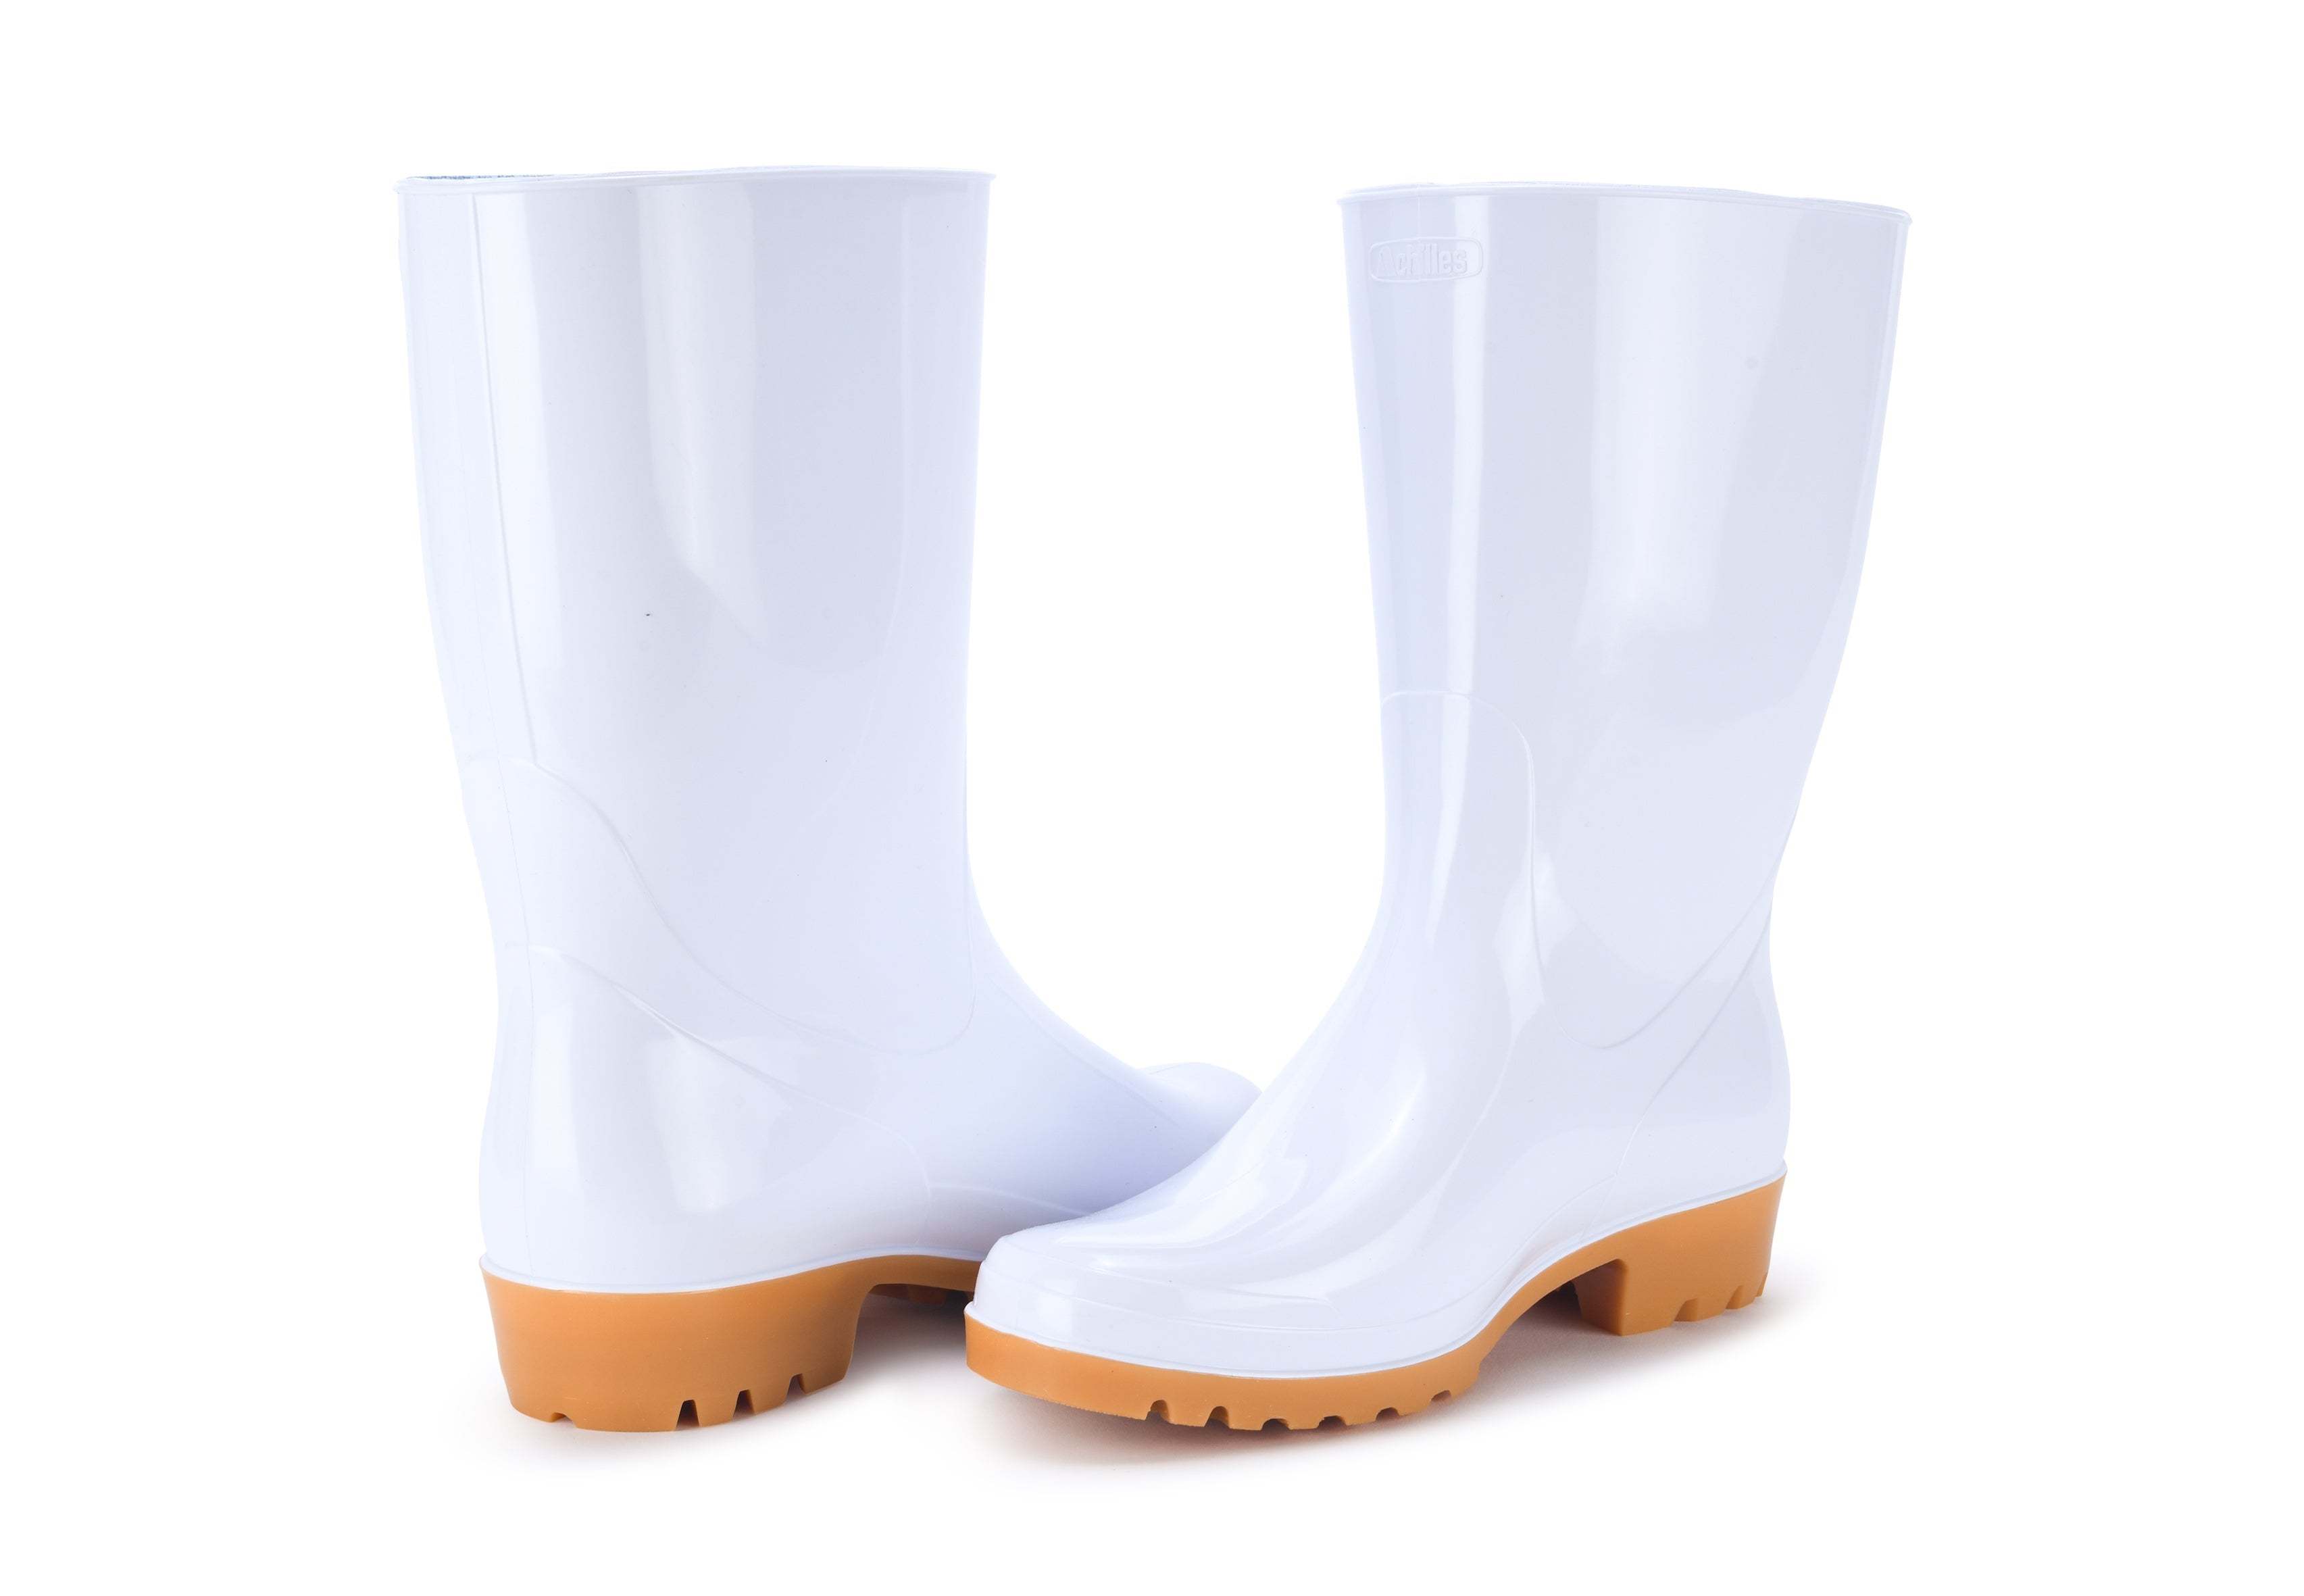 Labor Rain Boots 28cm (Japan Made)-Achilles-BK-JP/TW Size-1: 225-偉豐鞋 WELL SHOE HK-Well Shoe-偉豐鞋-偉豐網-荃灣鞋店-Functional shoes-Hong Kong Tsuen Wan Shoe Store-Tai Wan Shoe-Japan Shoe-高品質功能鞋-台灣進口鞋-日本進口鞋-High-quality shoes-鞋類配件-荃灣進口鞋-香港鞋店-優質鞋類產品-水靴-帆布鞋-廚師鞋-香港鞋品牌-Hong Kong Shoes brand-長者鞋-Hong Kong Rain Boots-Kitchen shoes-Cruthes-Slipper-Well Shoe Hong Kong-Anello-Arriba-休閒鞋-舒適鞋-健康鞋-皮鞋-Healthy shoes-Leather shoes-Hiking shoes